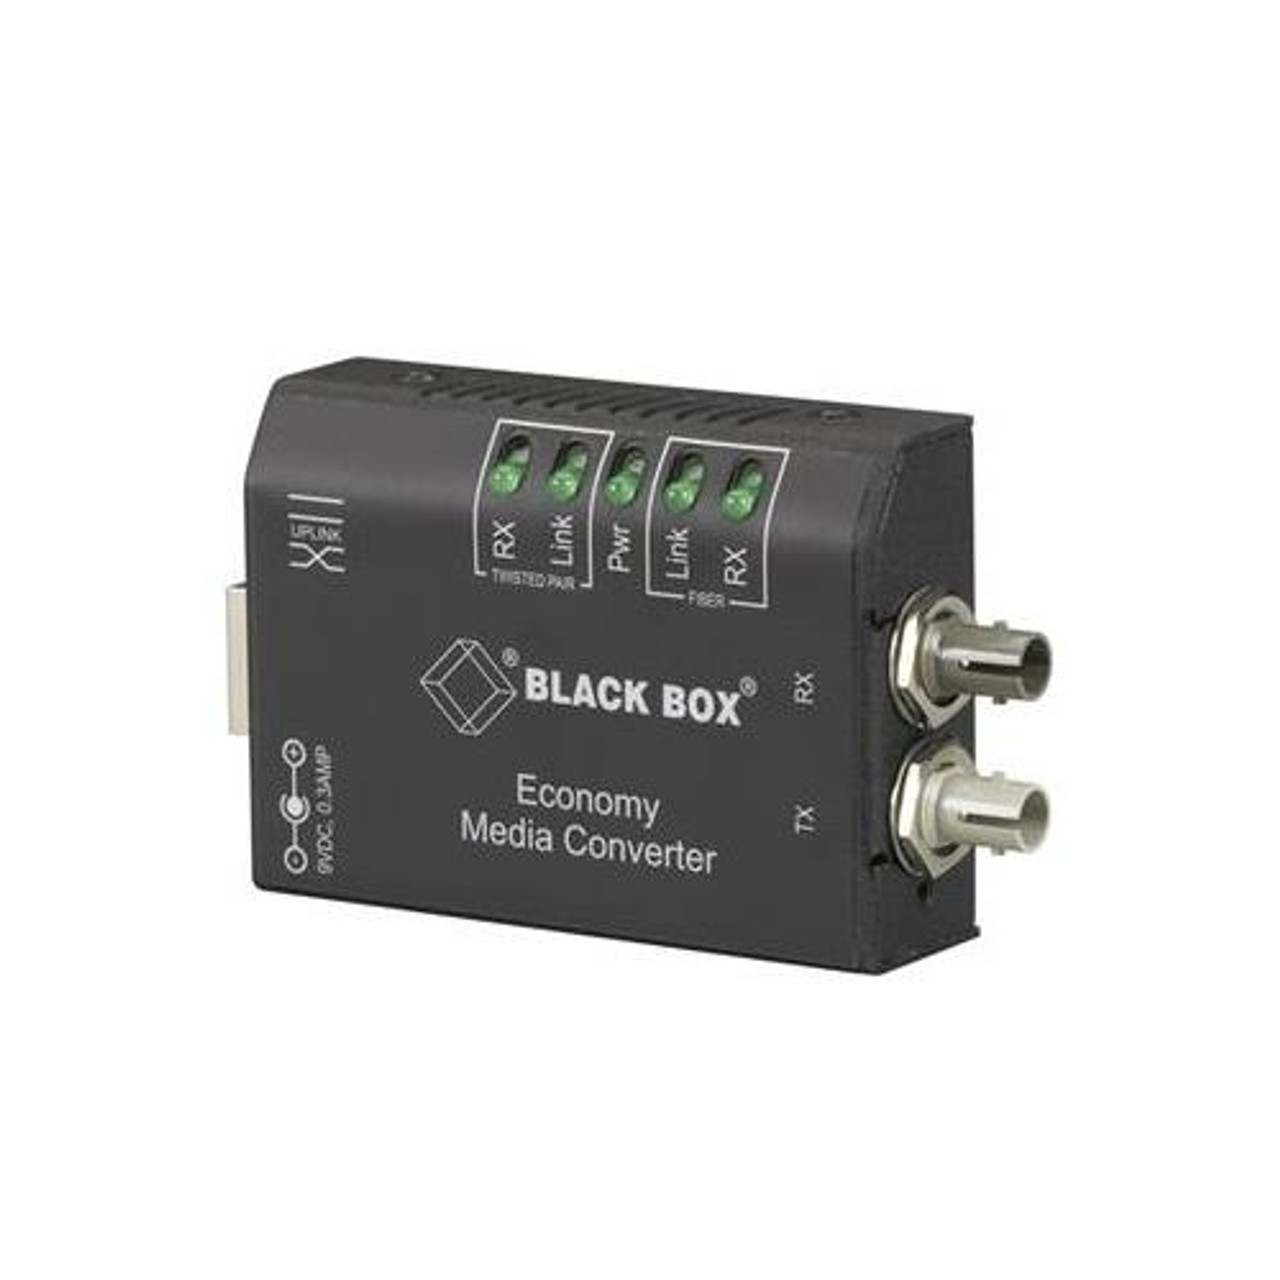 PS583A Black Box NIB-Horizontal Rackmount Remote Power Manager 208 240 VAC Dual